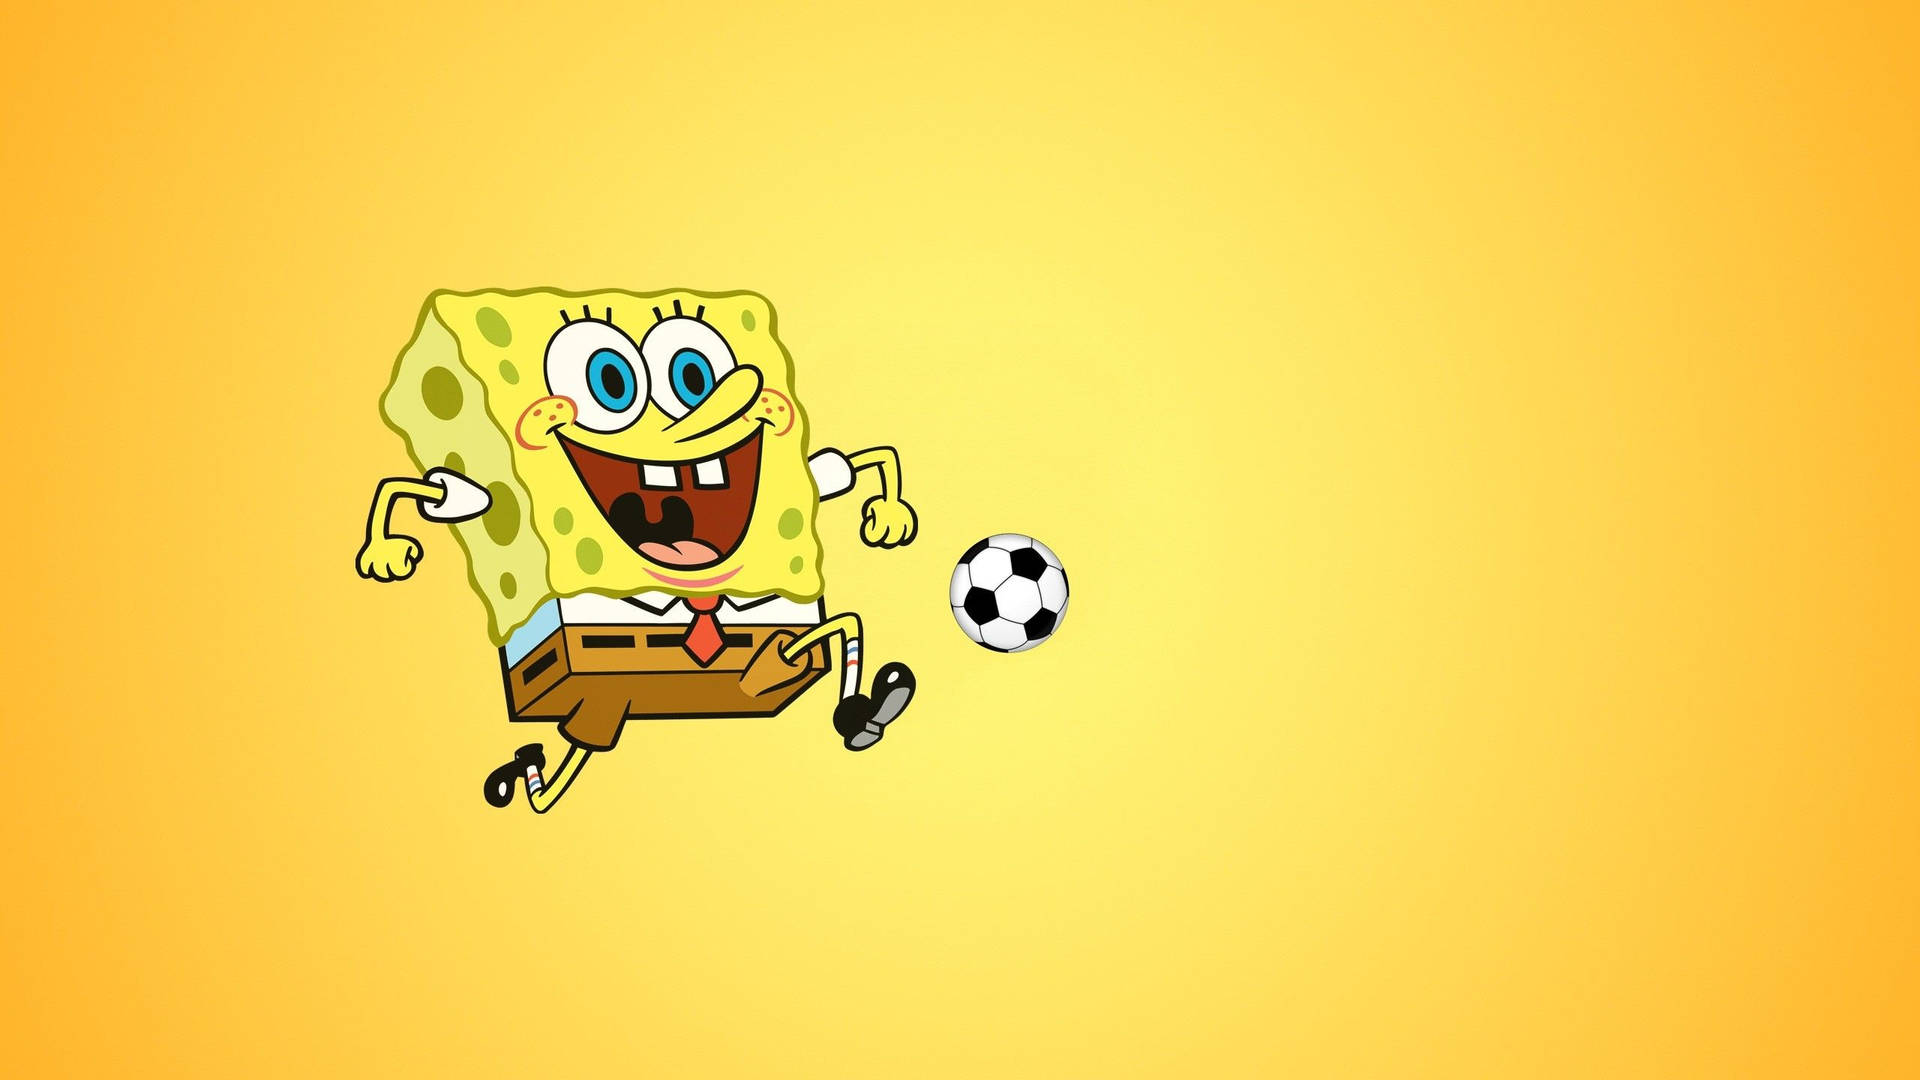 Cute Spongebob Playing Soccer Wallpaper